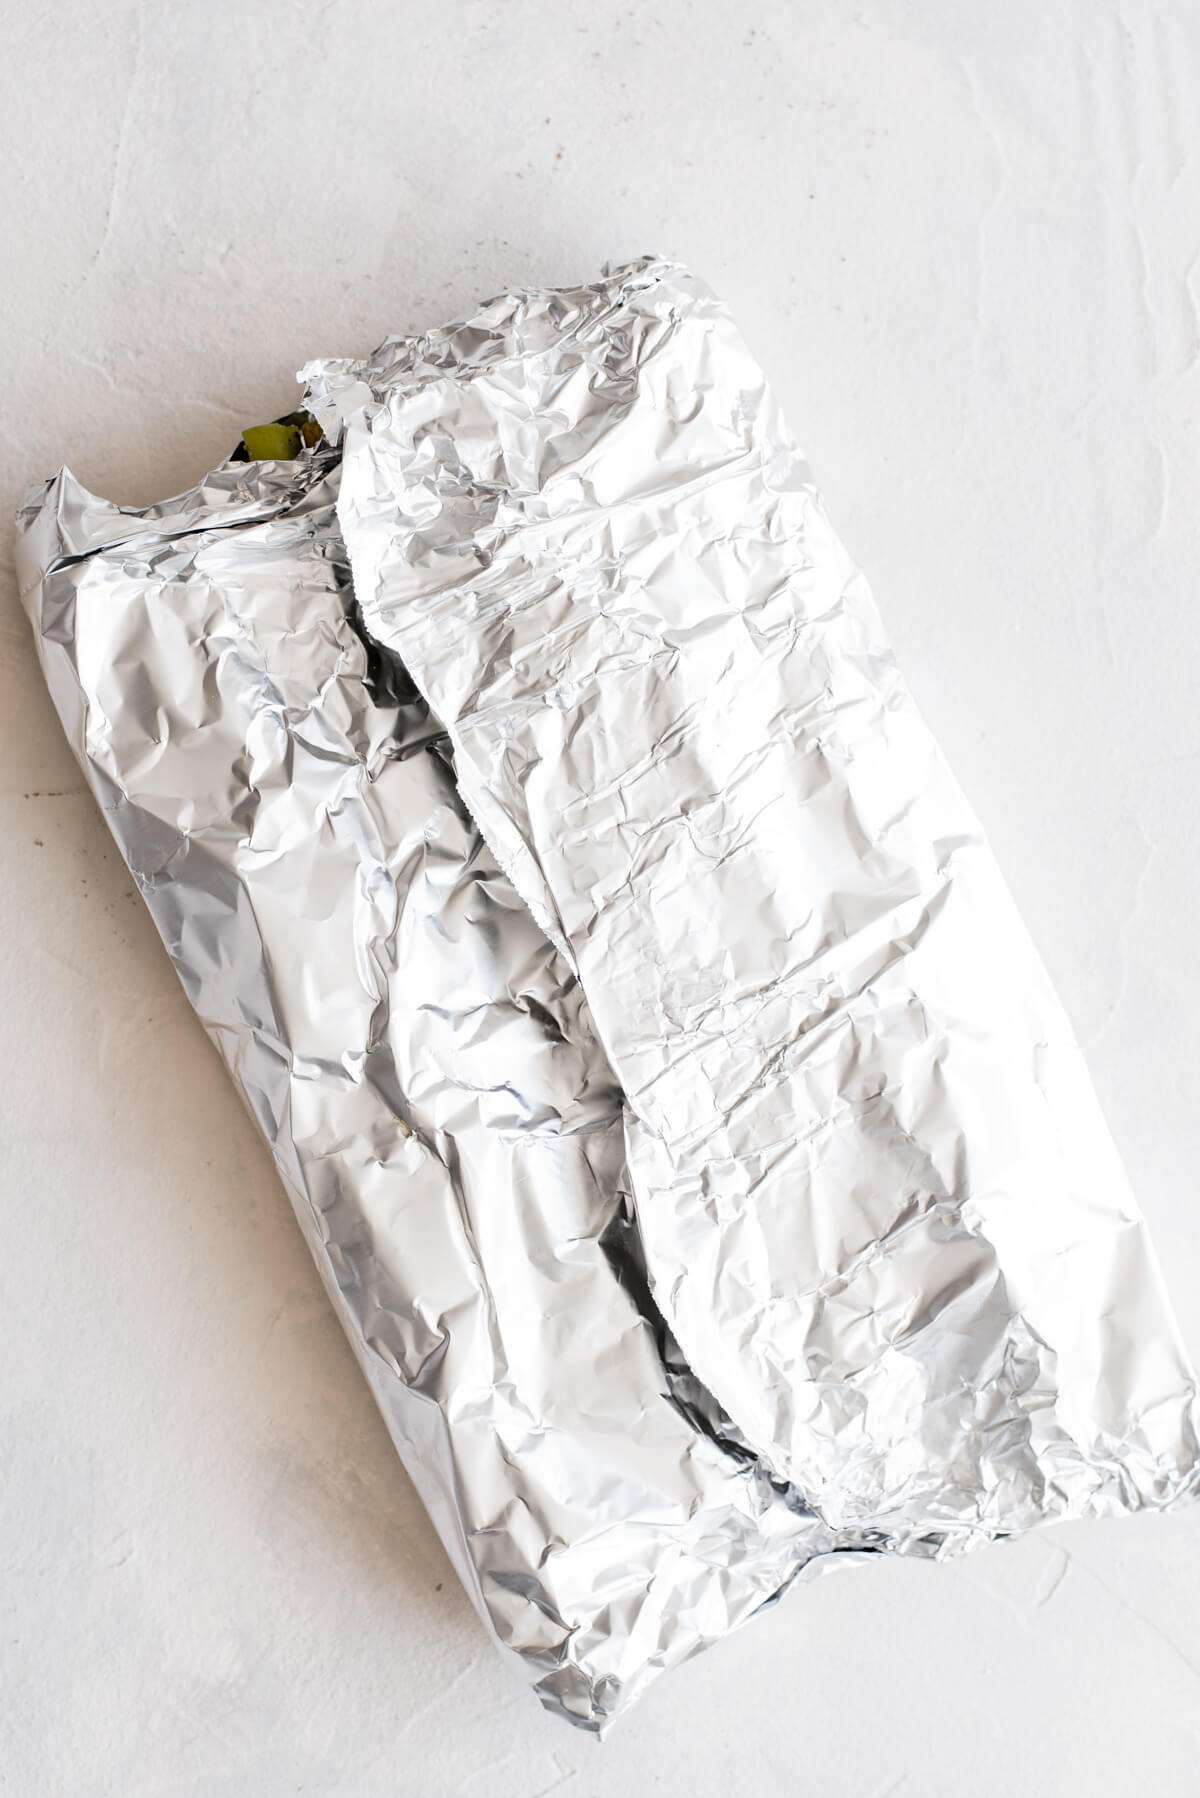 asparagus sealed in aluminum foil packet